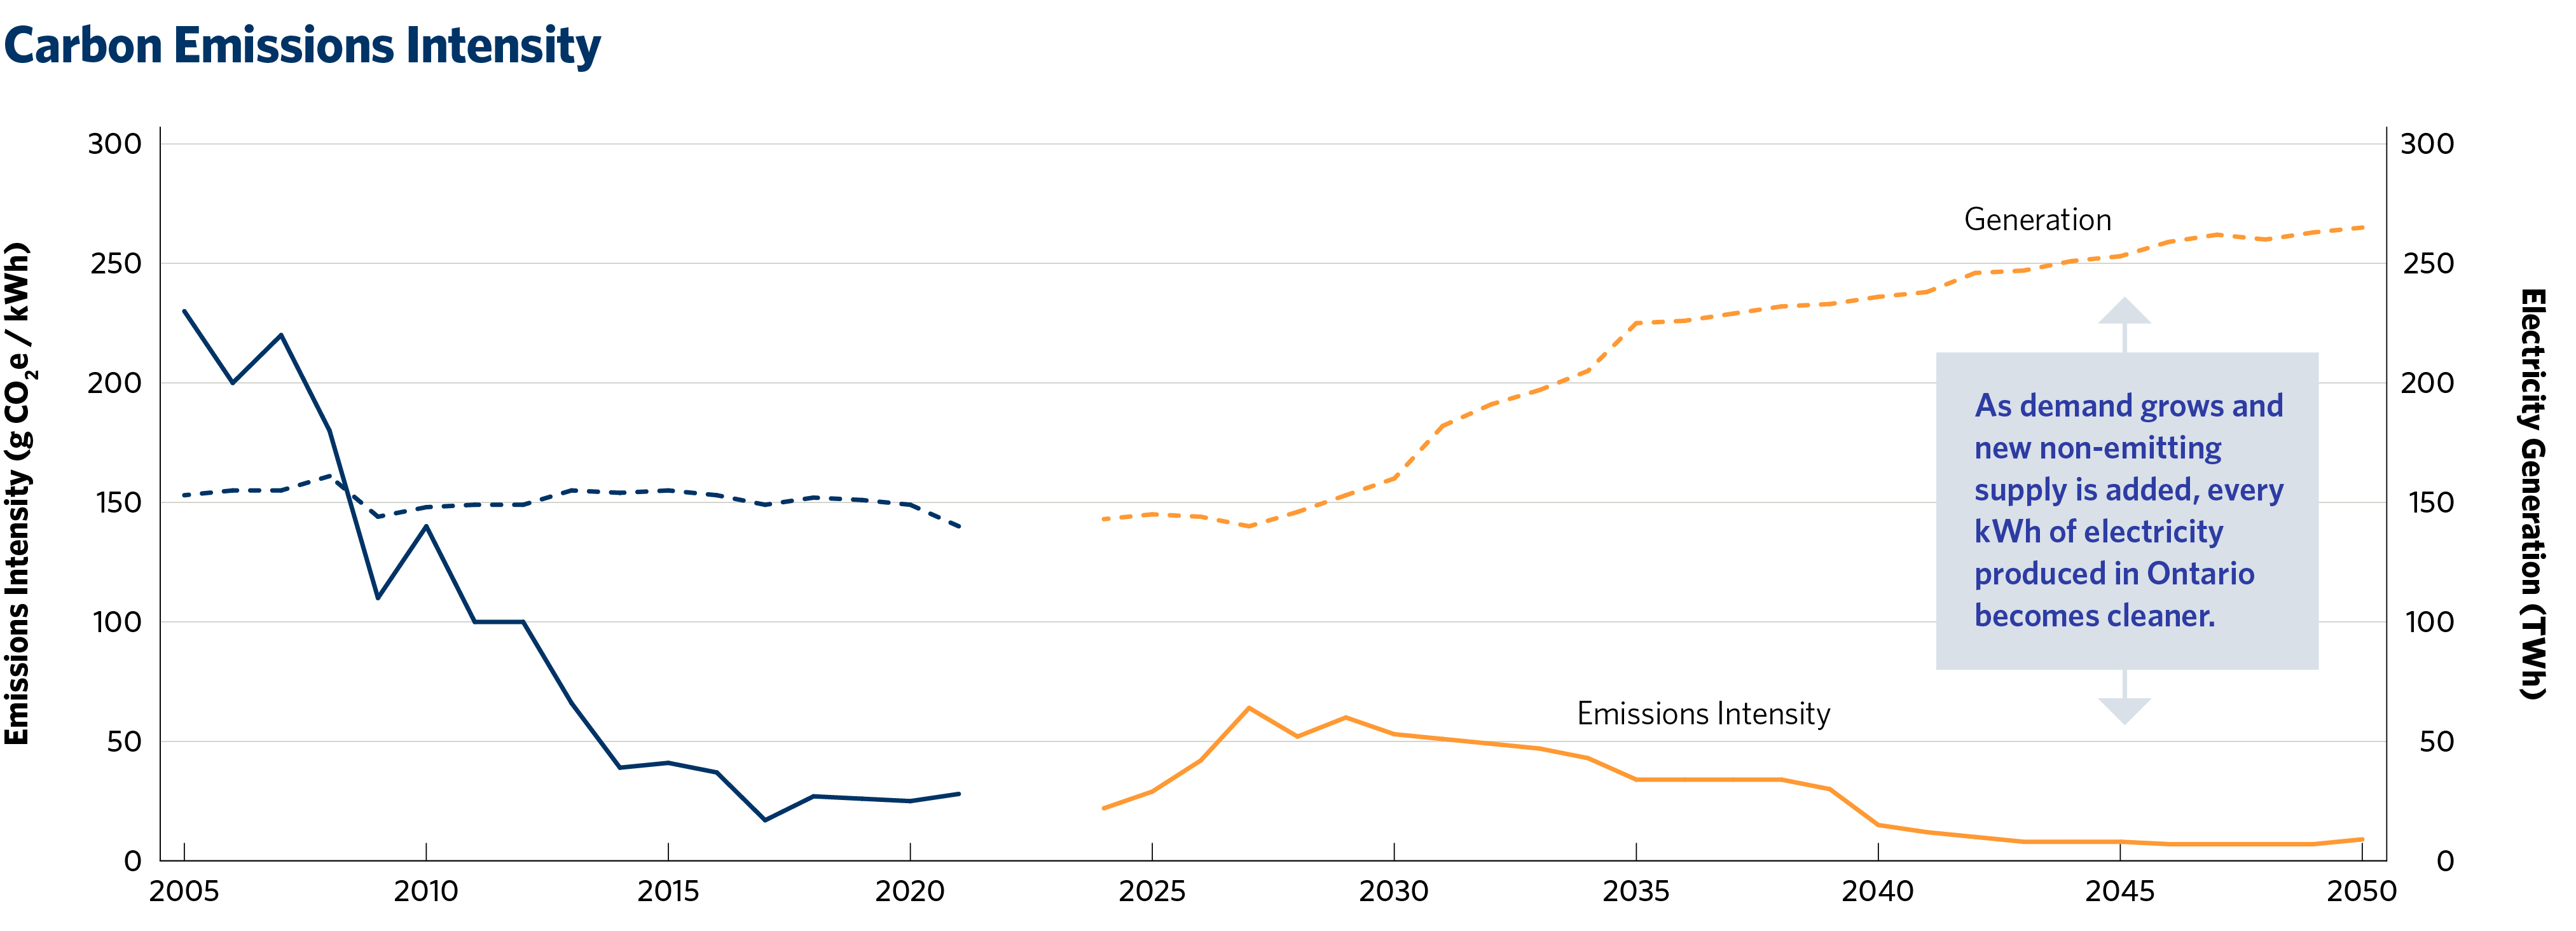 Carbon Emissions Intensity